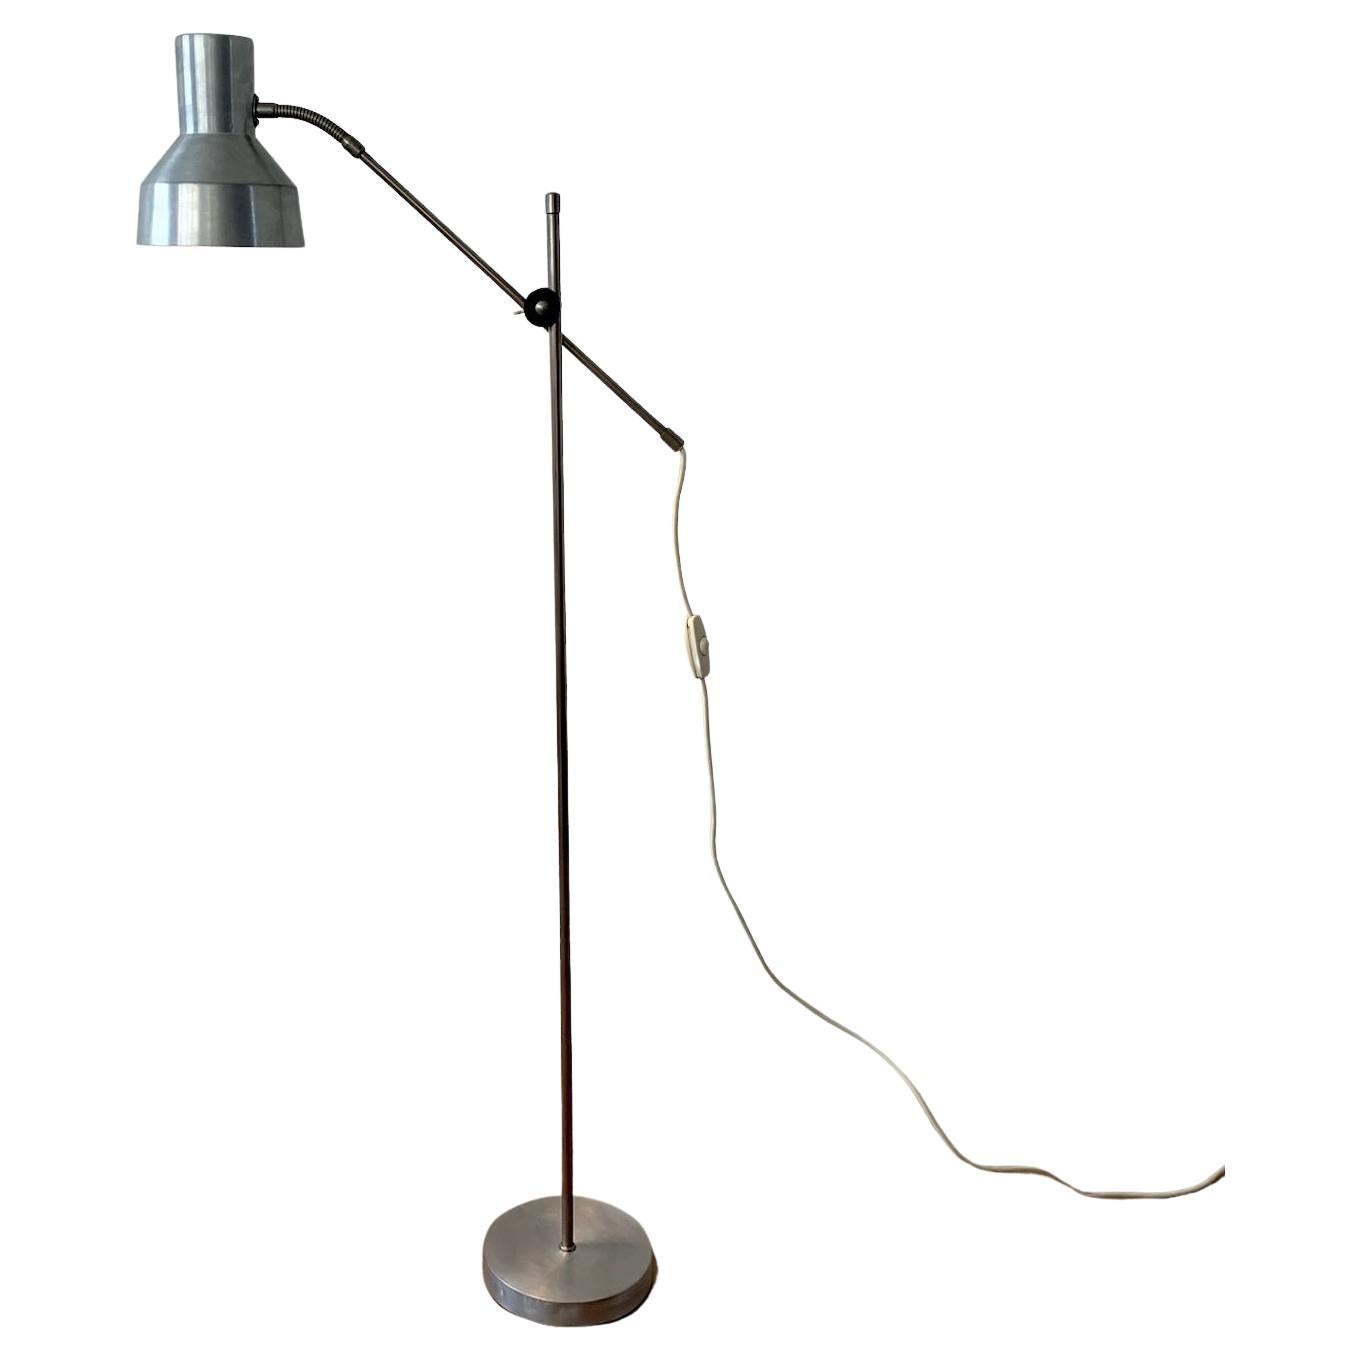 20th Century Floor Lamp by Ewå, Värnamo, Sweden, 1960s For Sale at